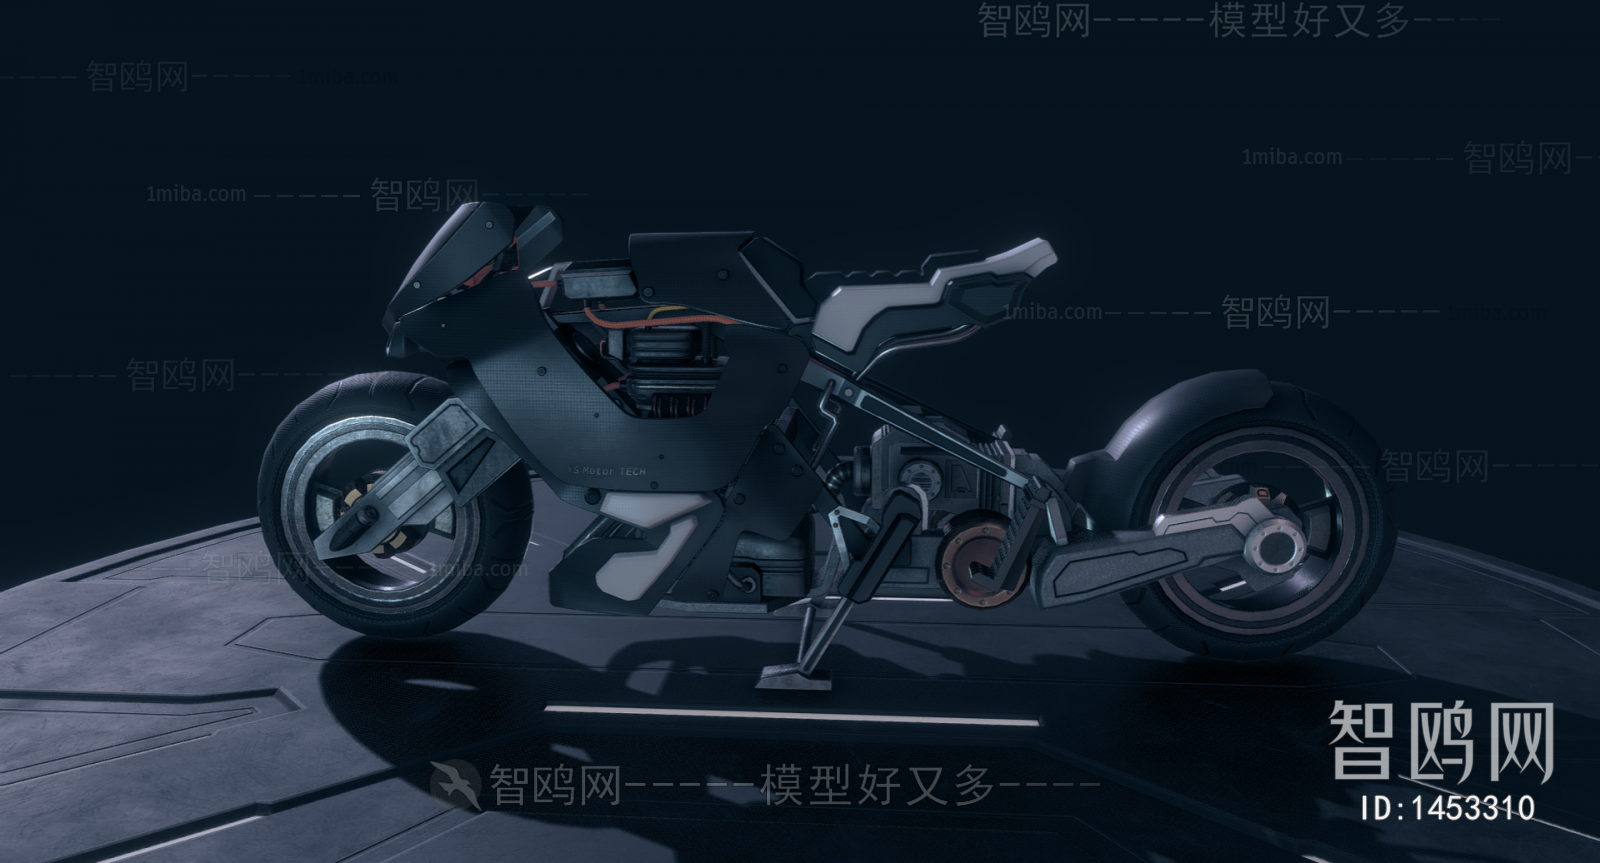 Modern Industrial Style Motorcycle